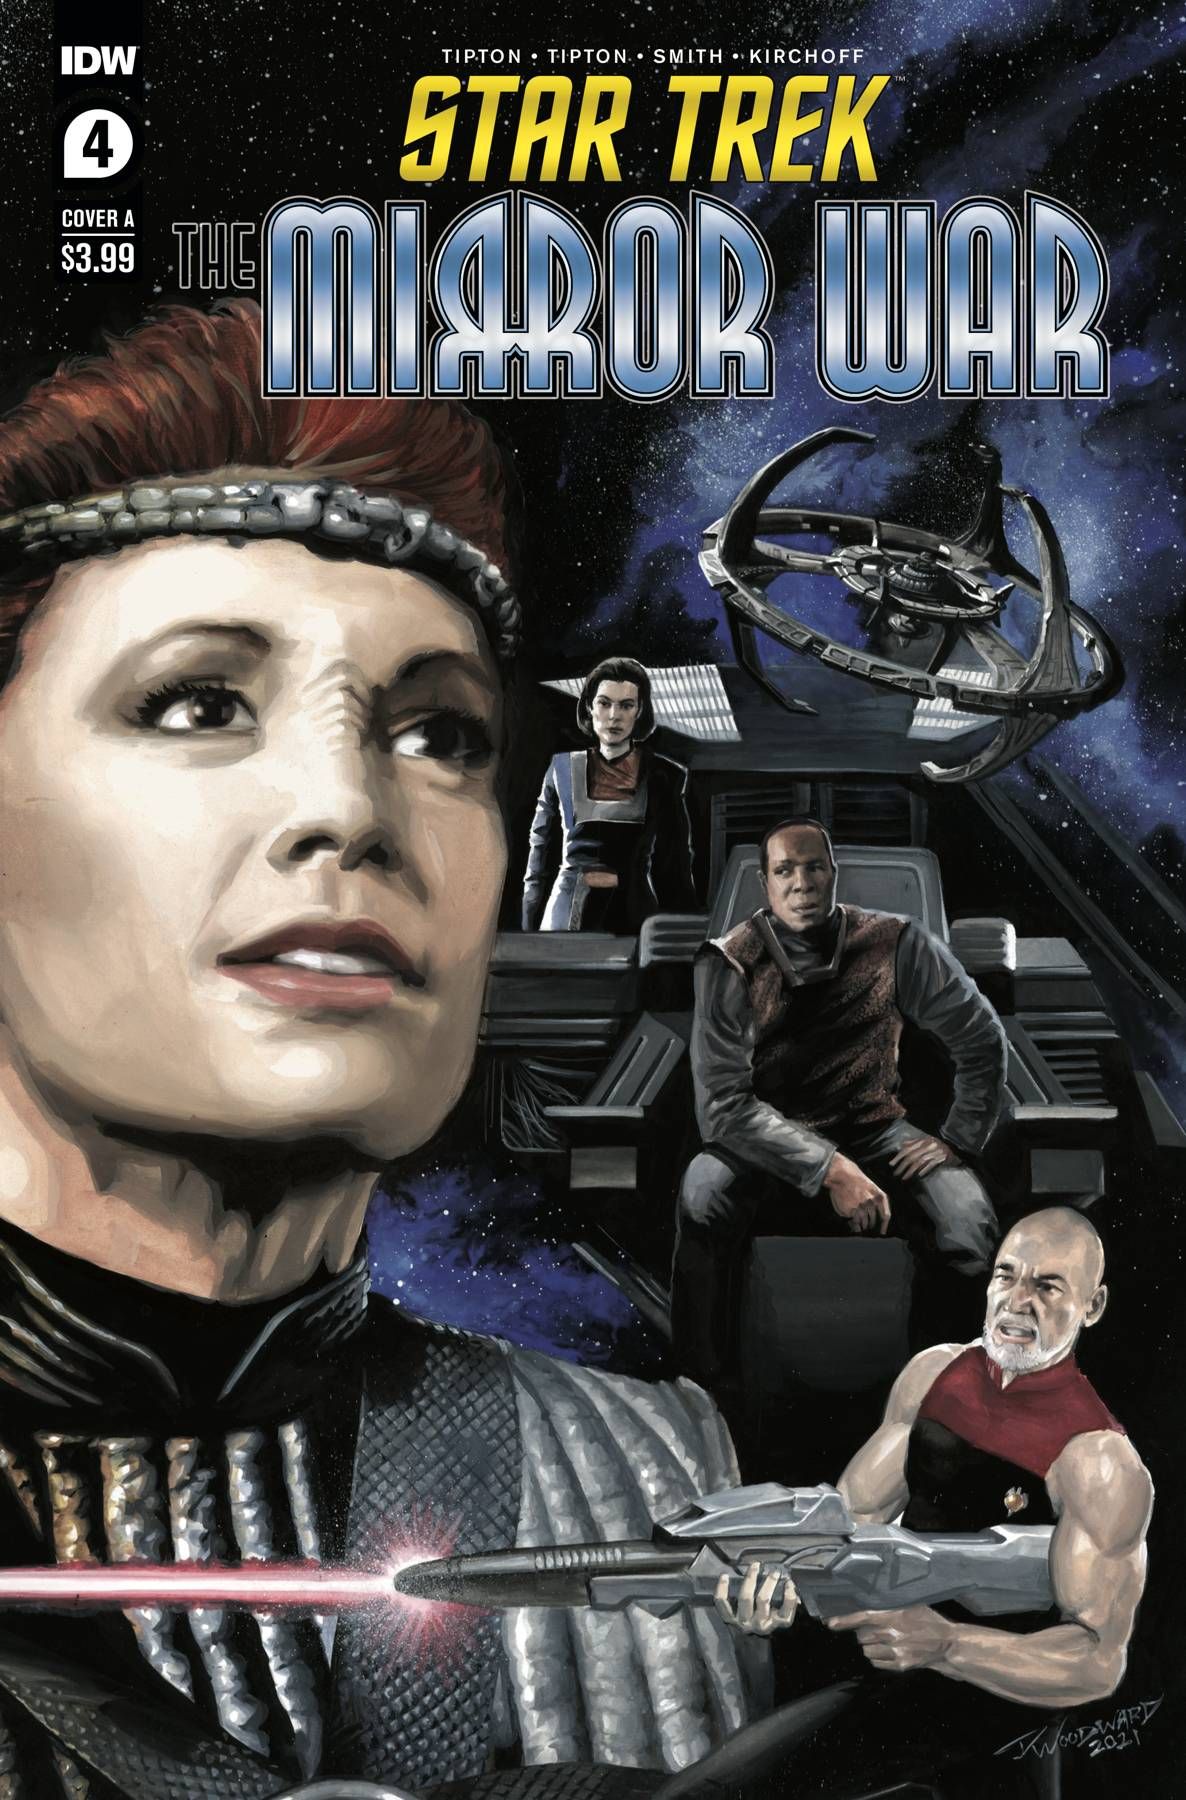 Star Trek: The Next Generation - Mirror War #4 Comic